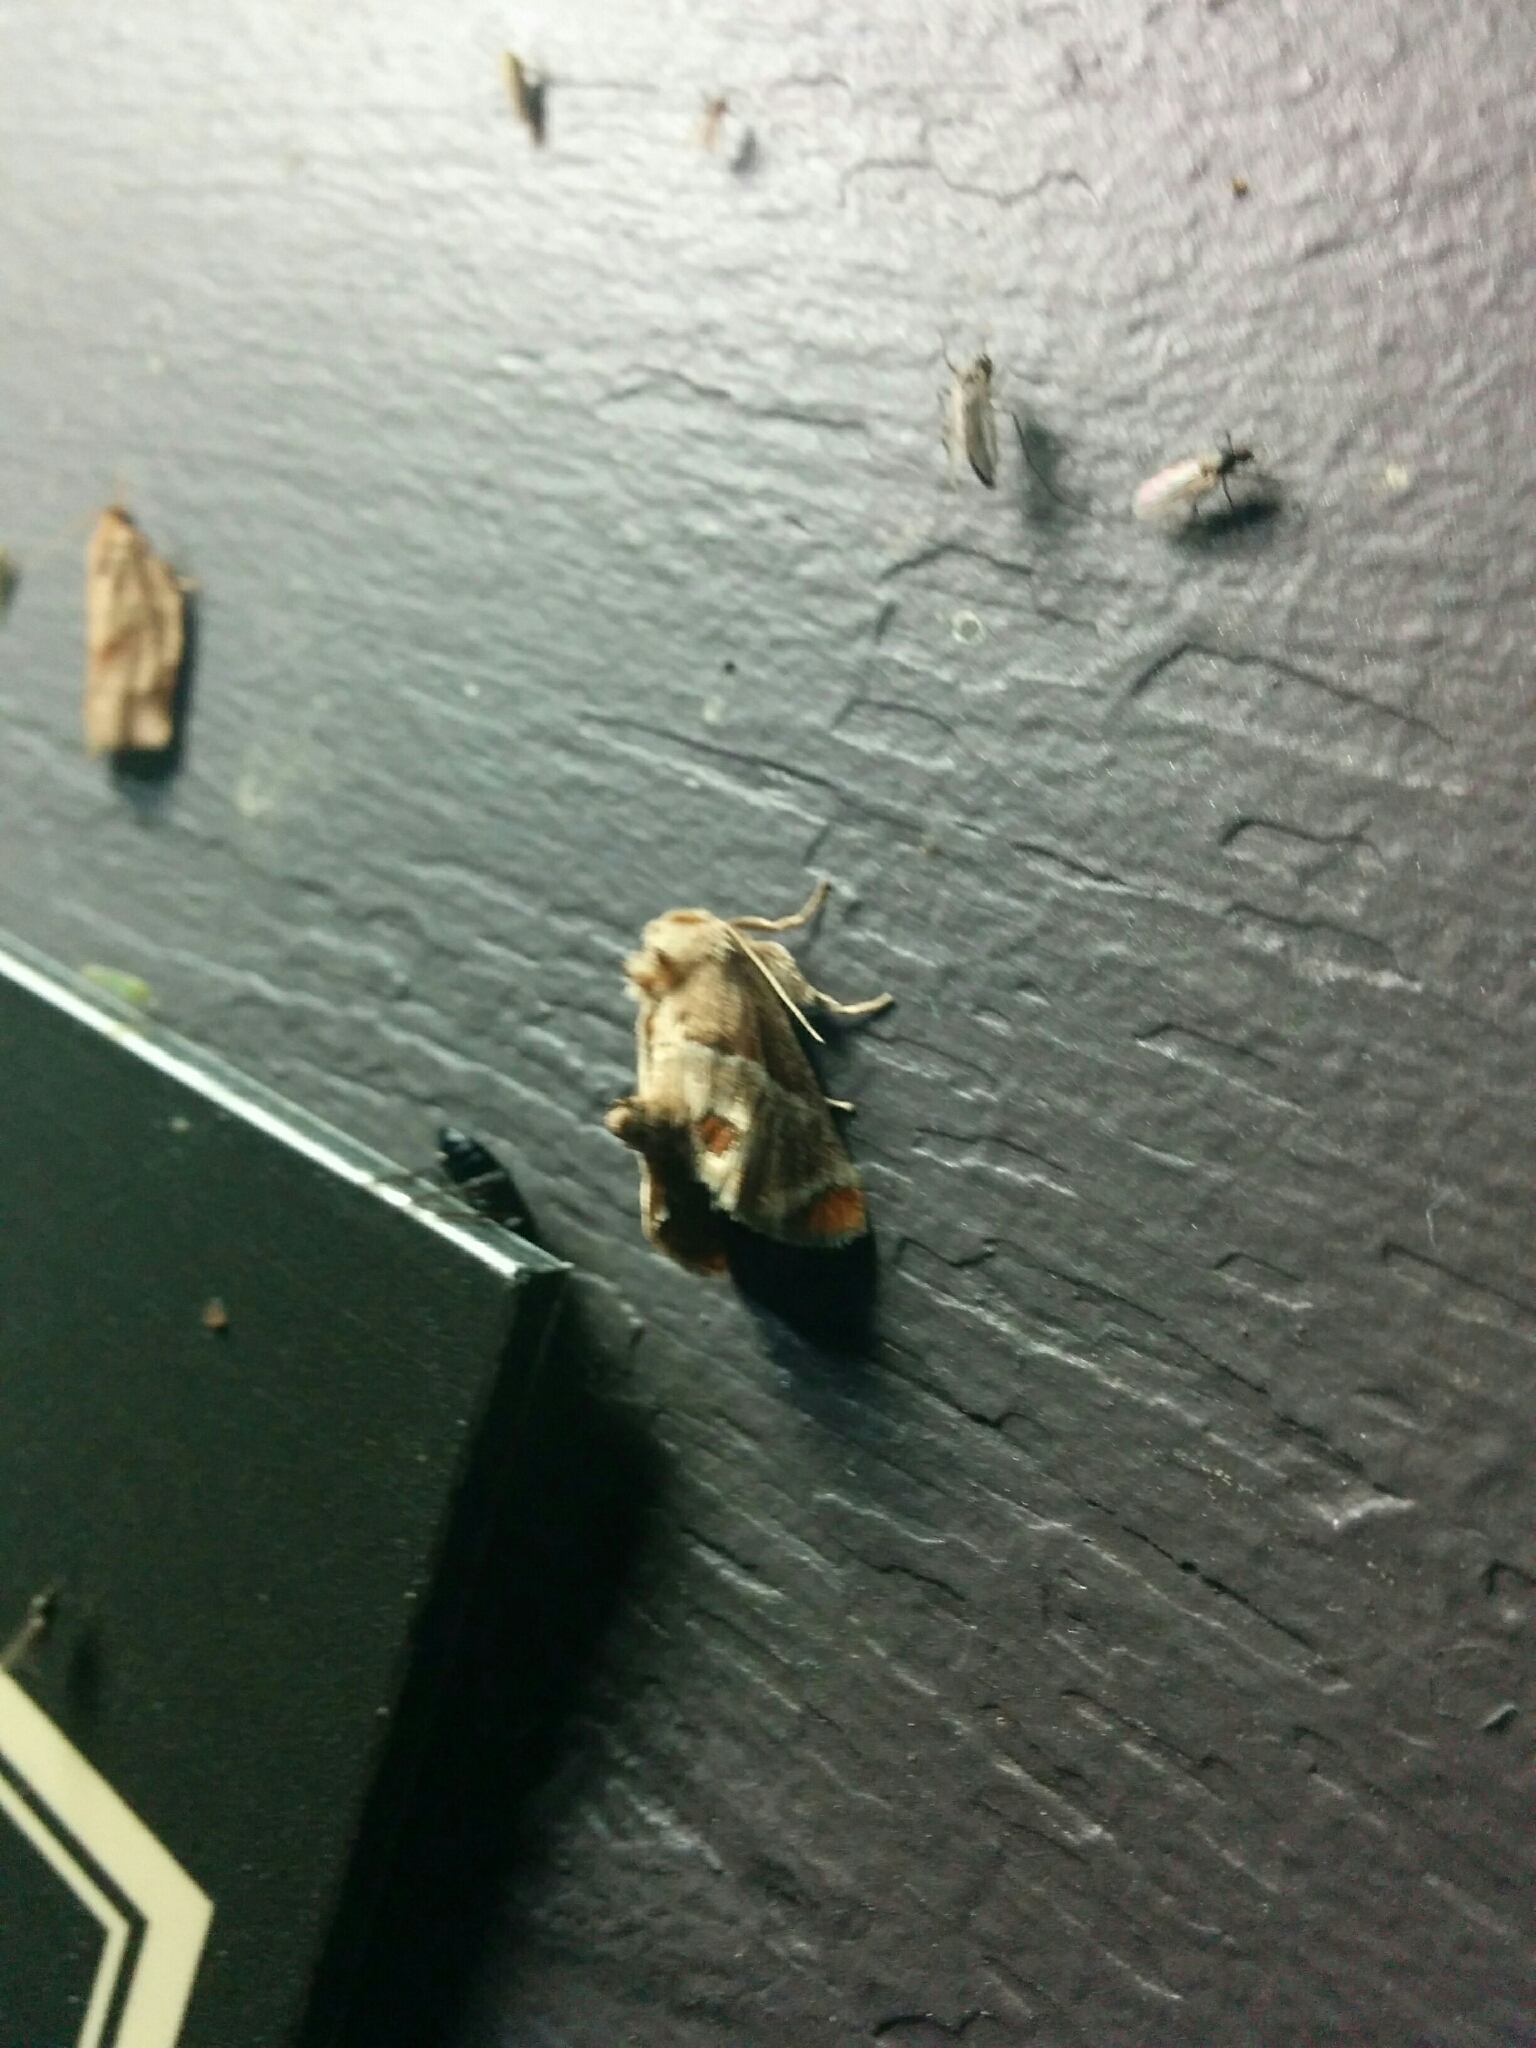 Image of Shagreened Slug Moth